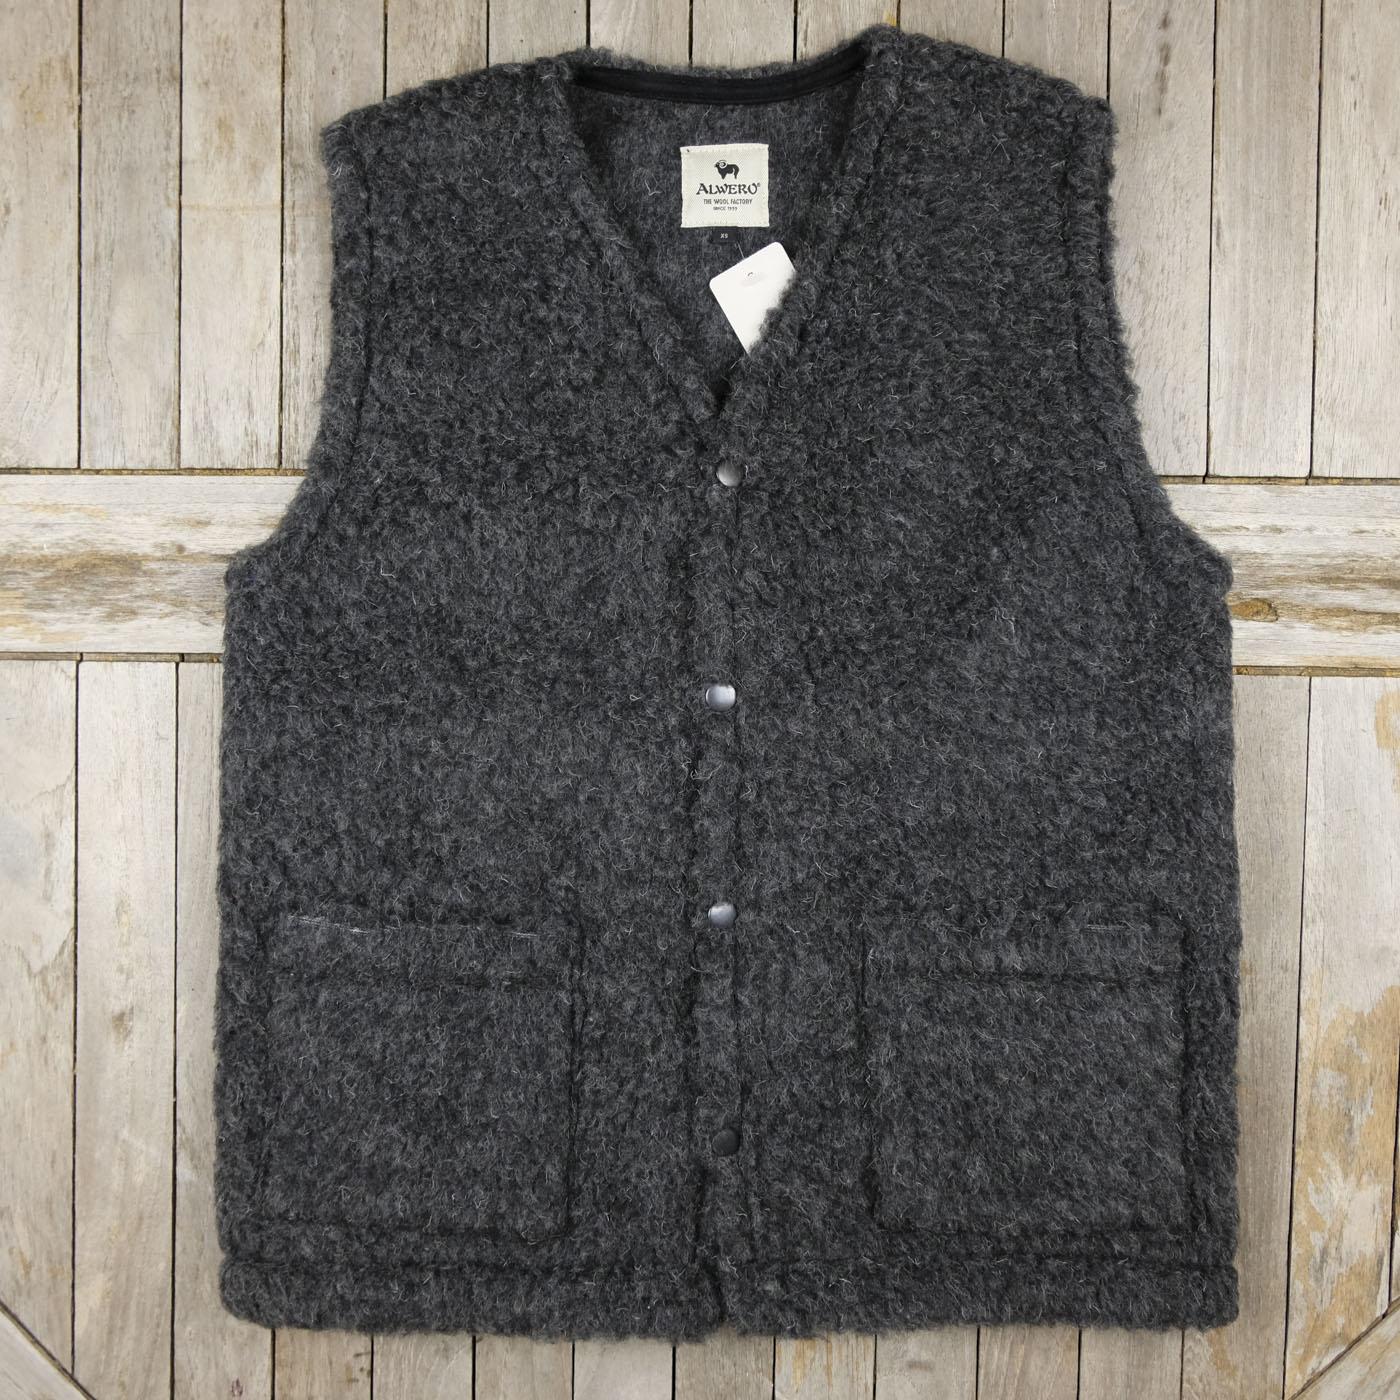 Adult's Wool Turk Vest [1179 TURK] - £68.00 : Cambridge Baby, Organic ...